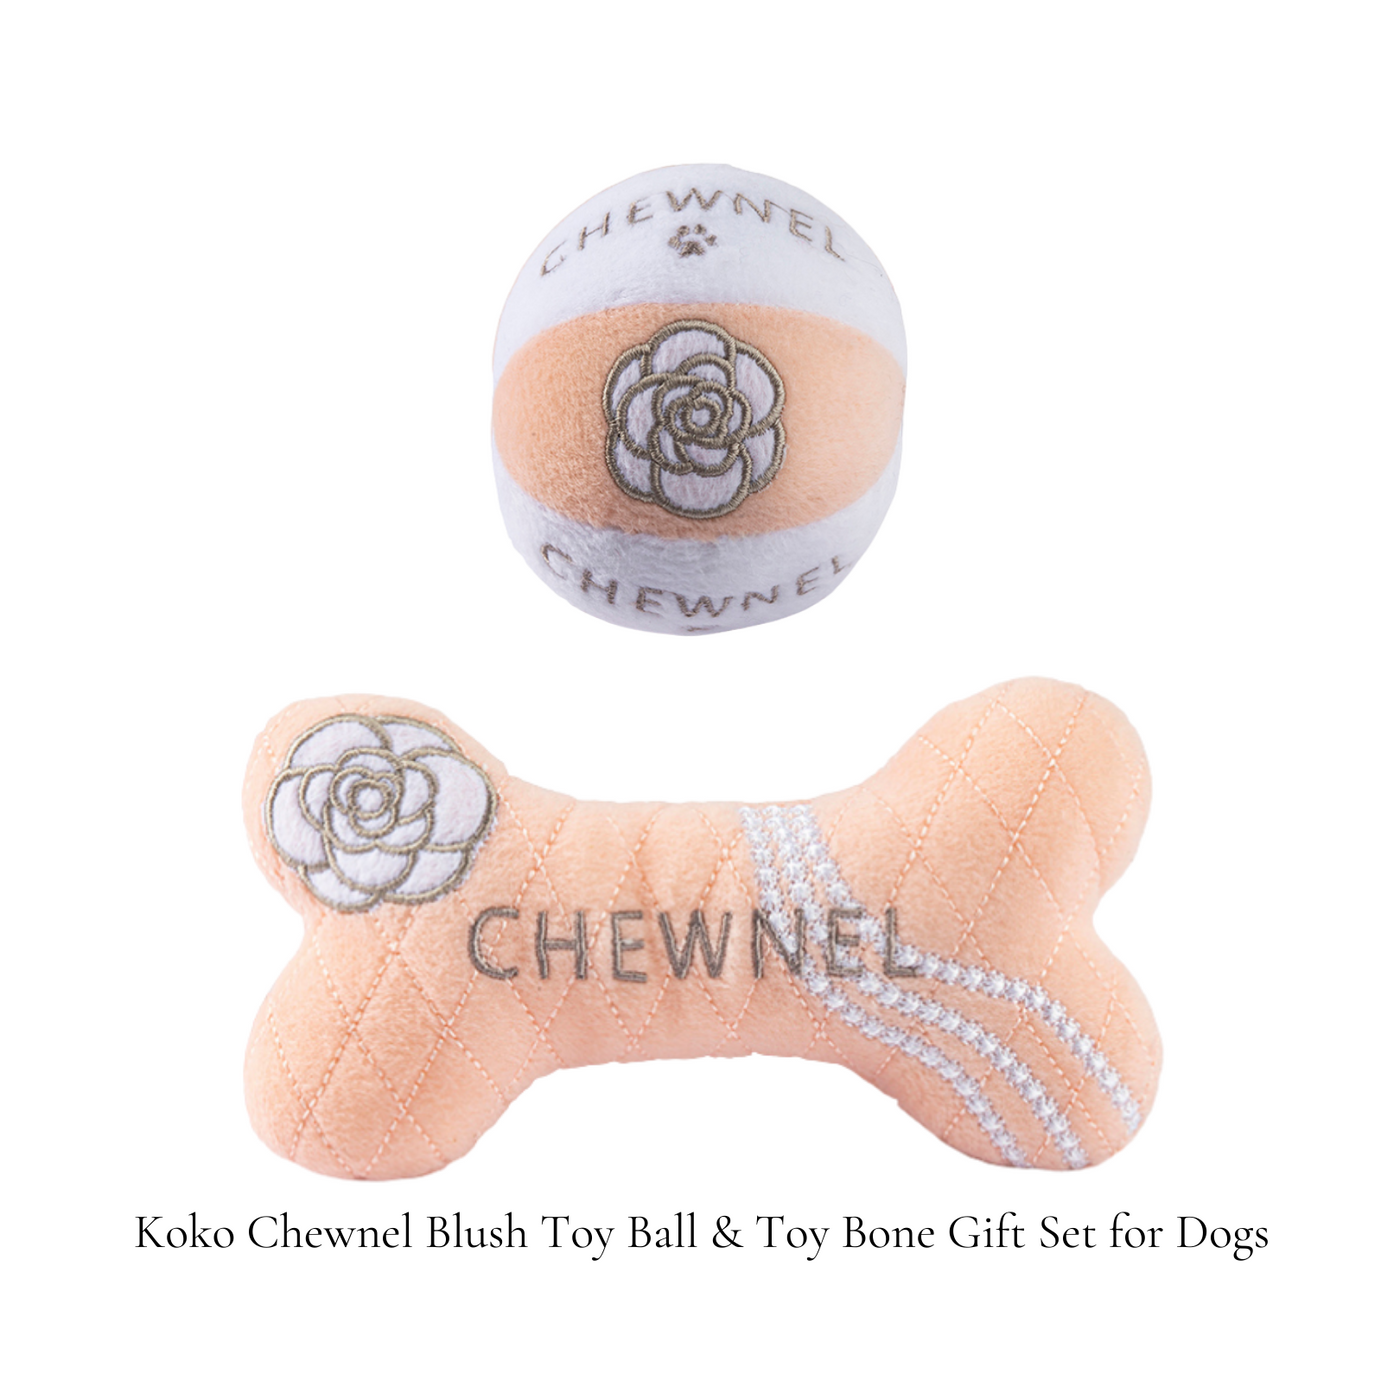 Koko Chewnel Blush Toy Ball & Toy Bone Gift Set for Dogs